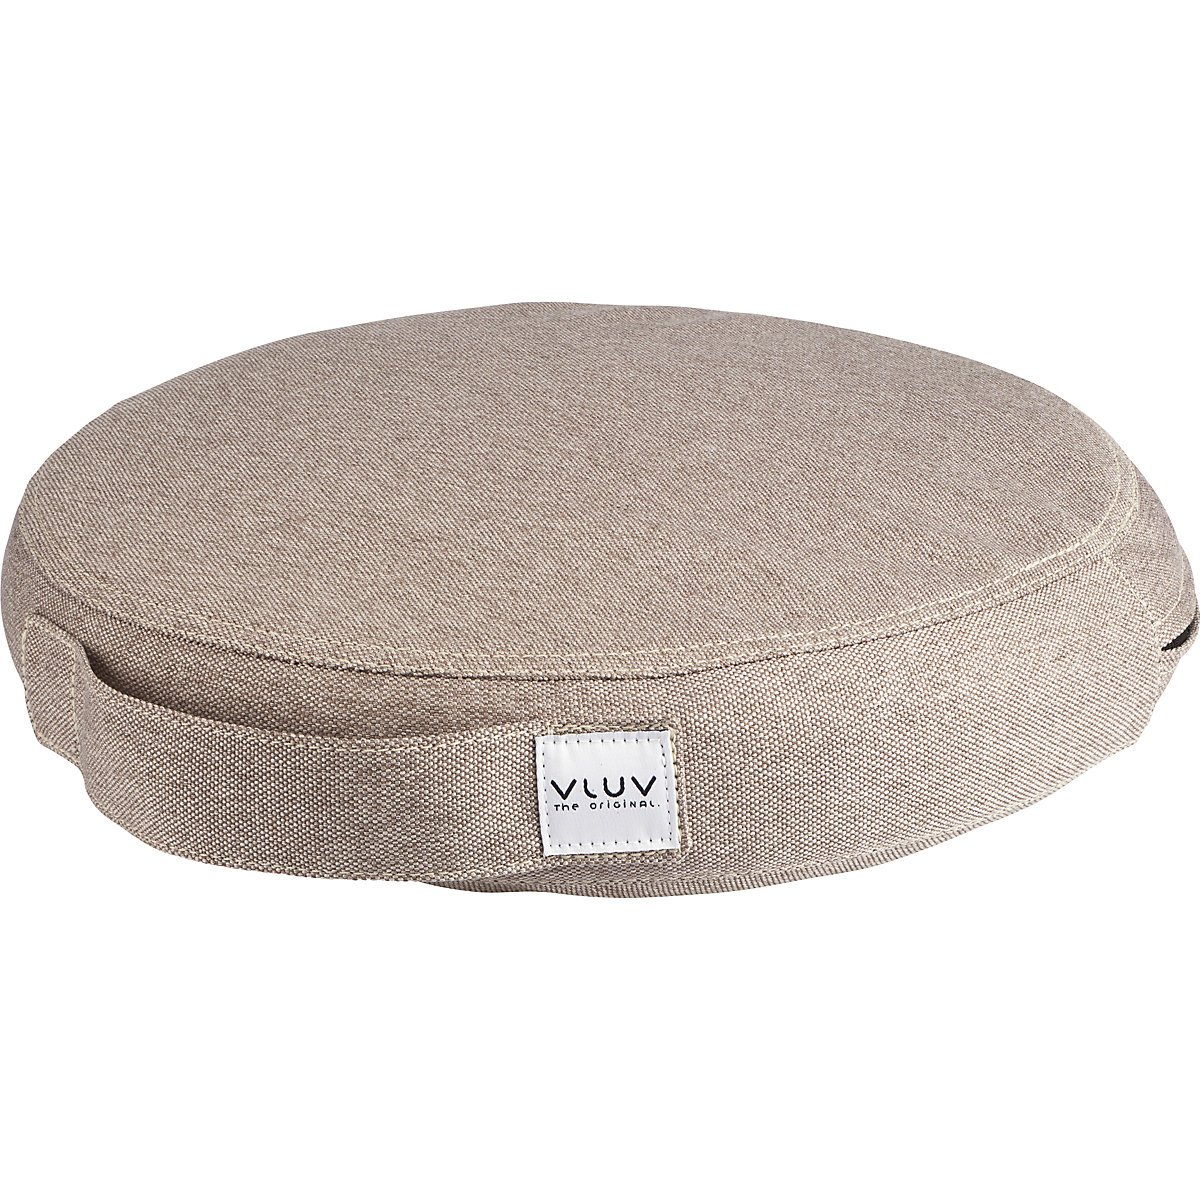 PIL&PED LEIV balance cushion – VLUV, with fabric cover, Ø 360 mm, stone grey